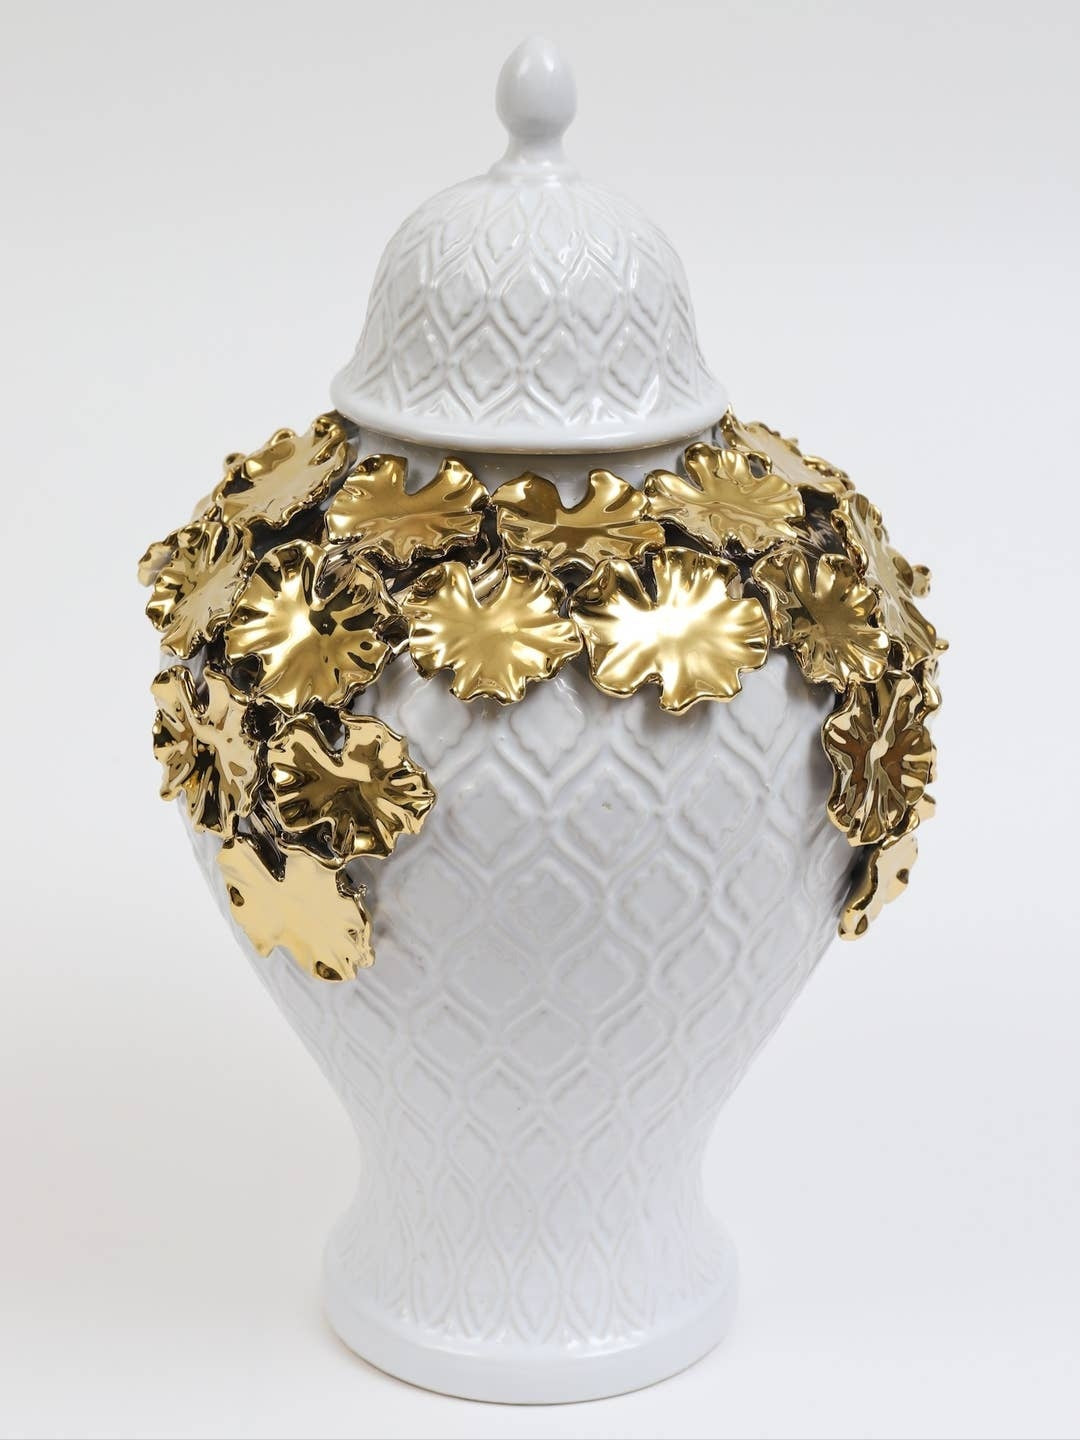 Textured Ginger Jar w/Gold Floral Design - Exquisite Designs Home Décor 